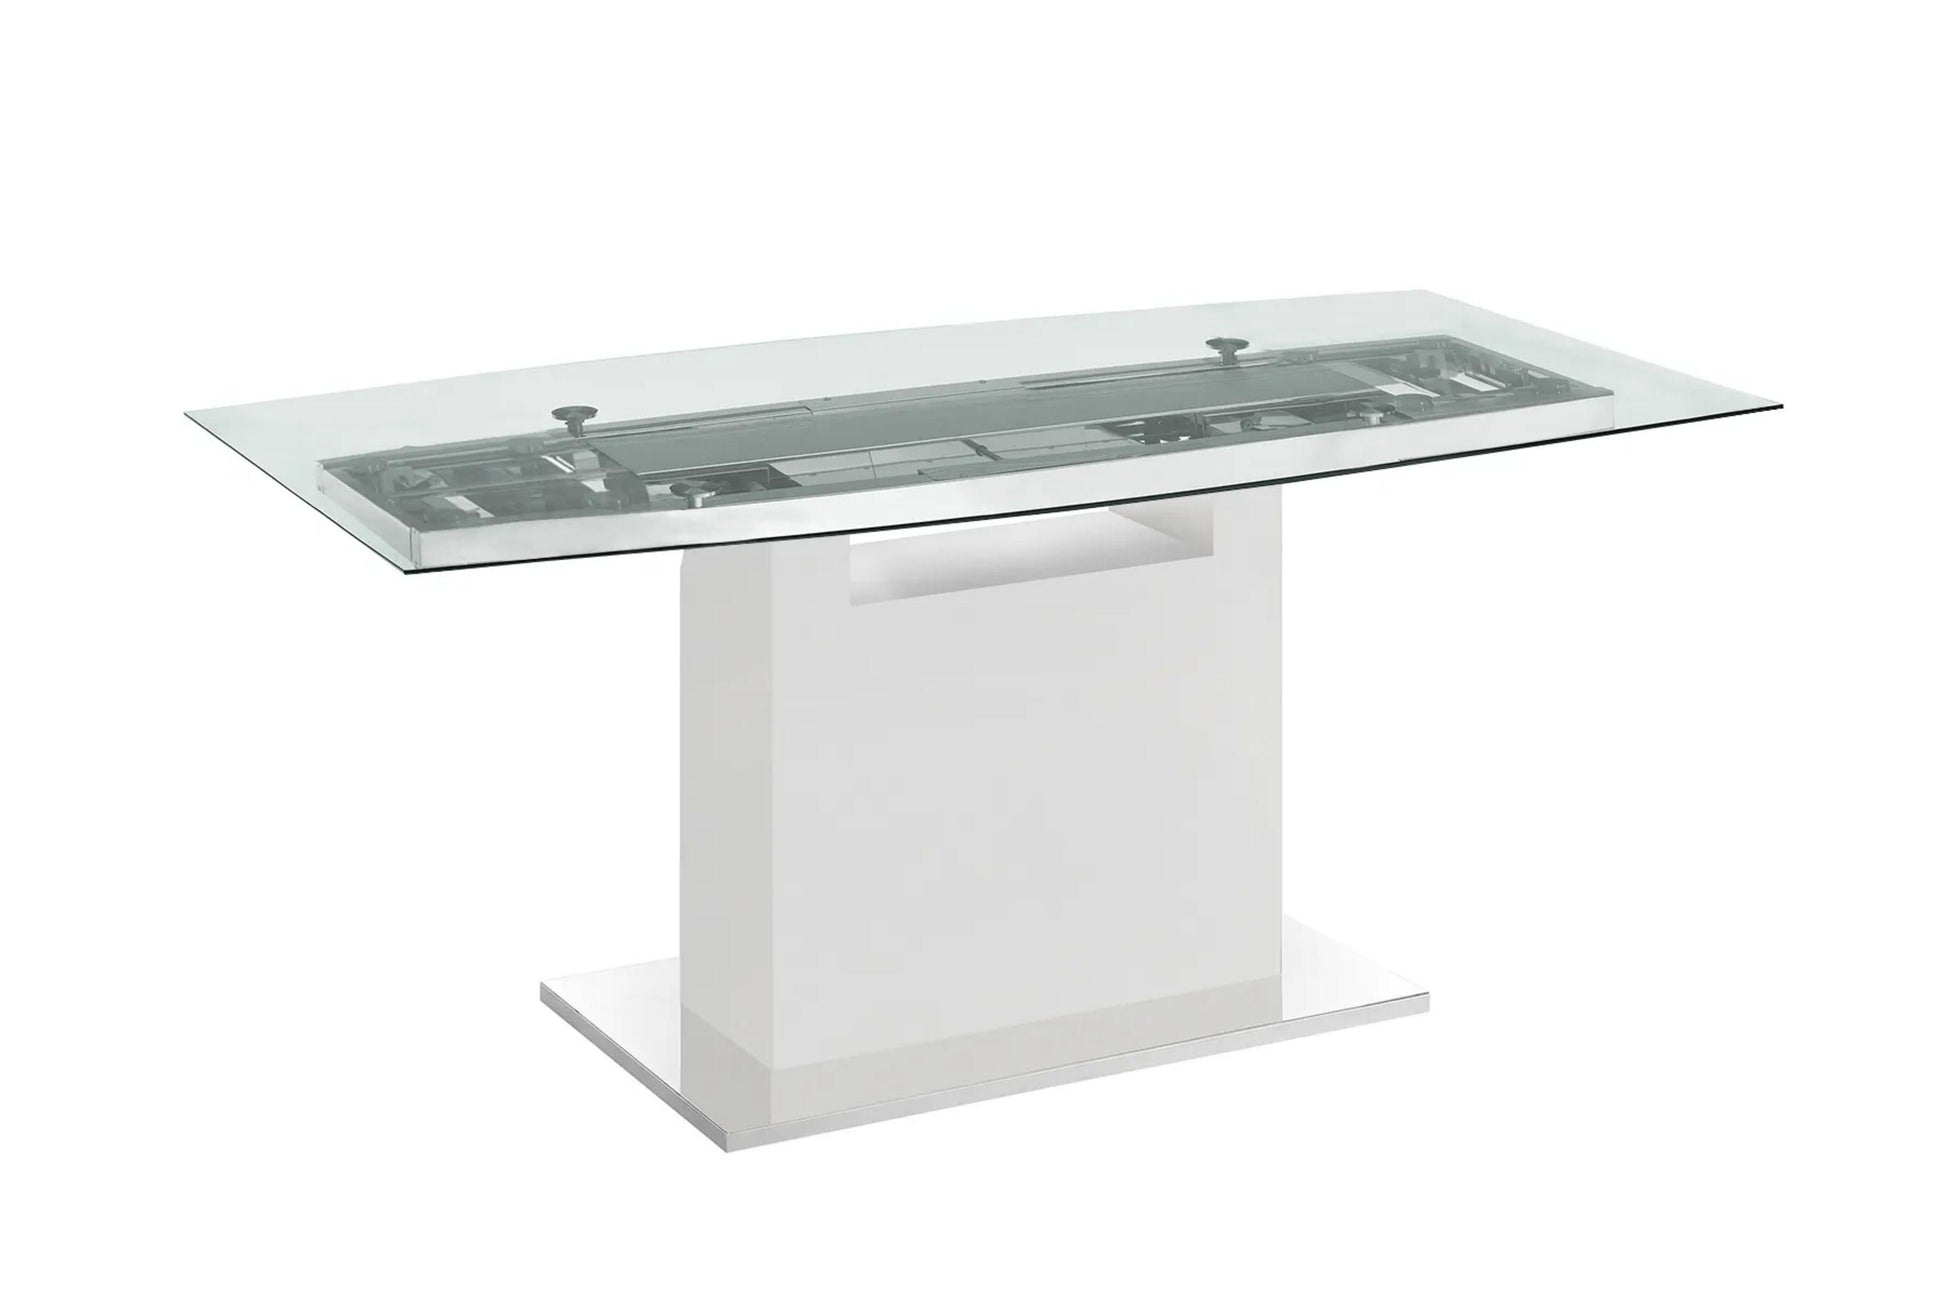 Olivia motorized dining table with white base - Venini Furniture 